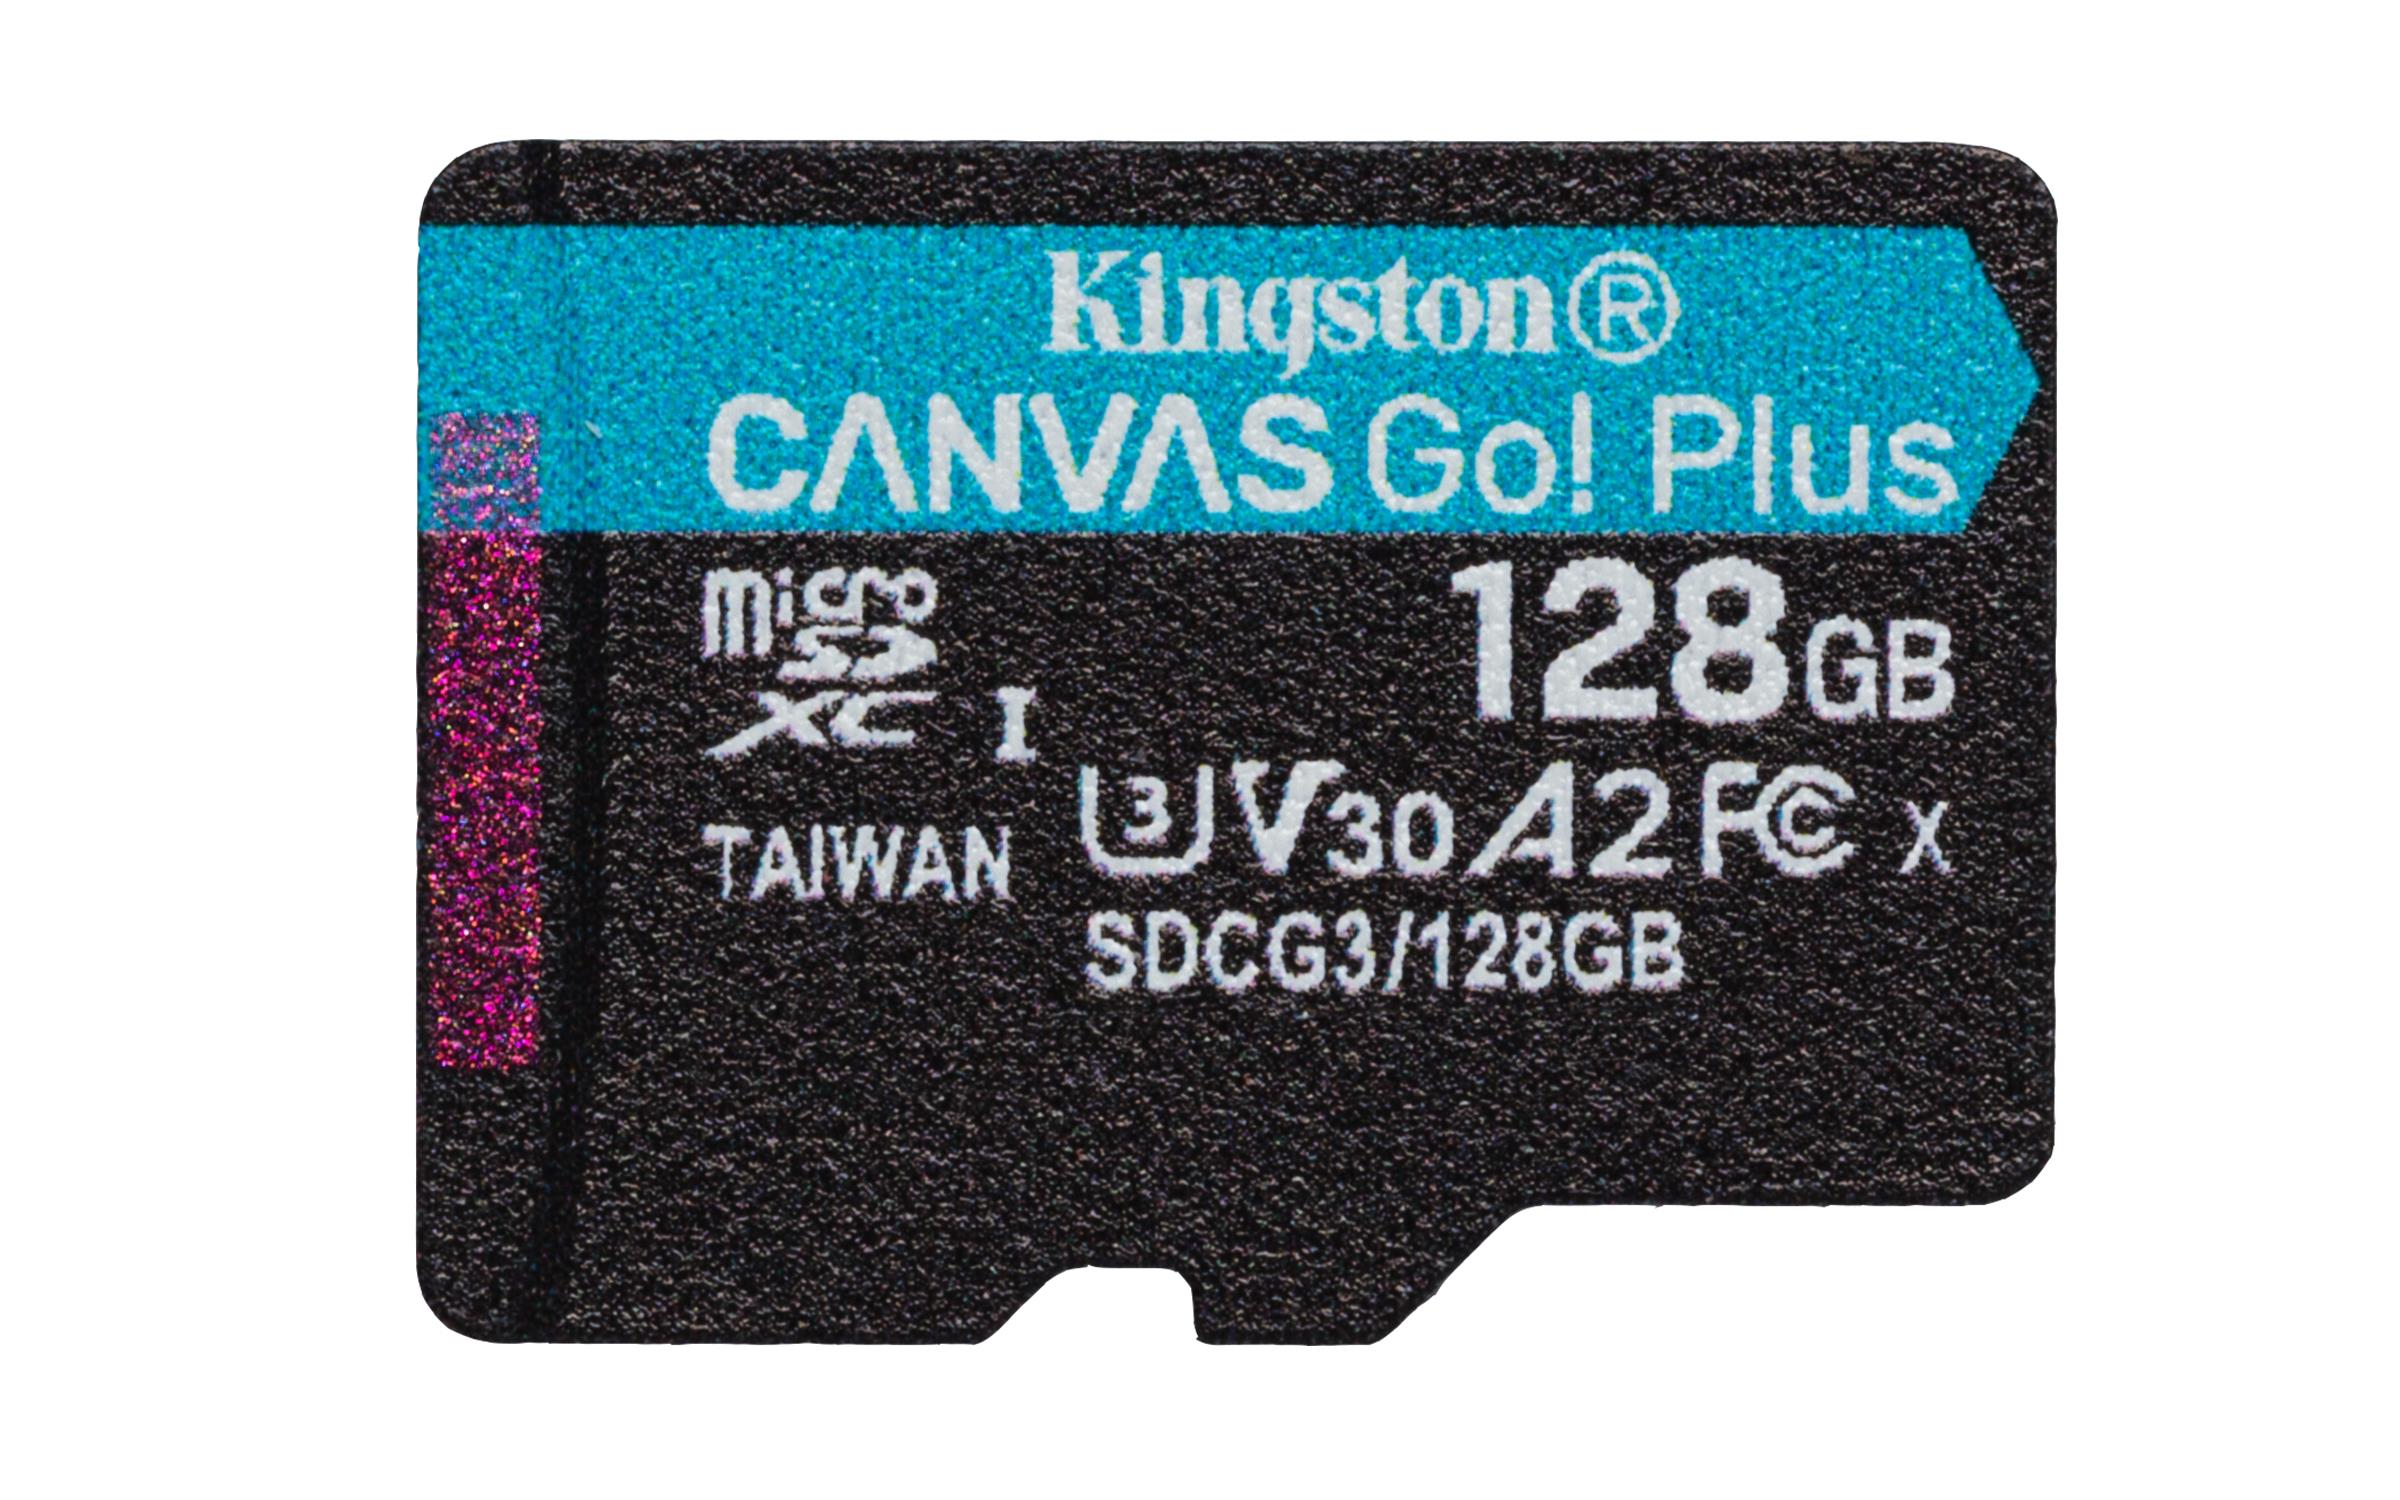 Kingston SDCG3/128GBSP MicroSDXC Canvas